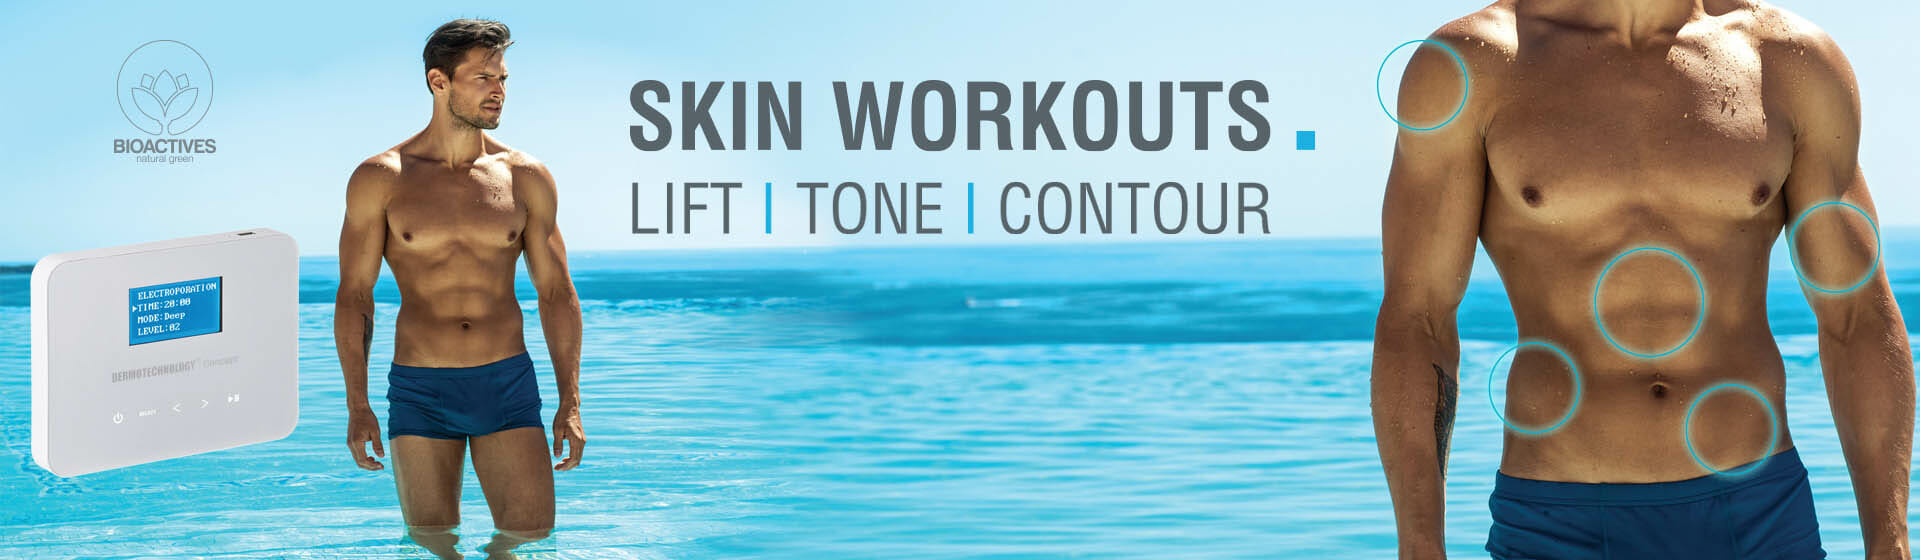 Skin workouts Lift tone contour